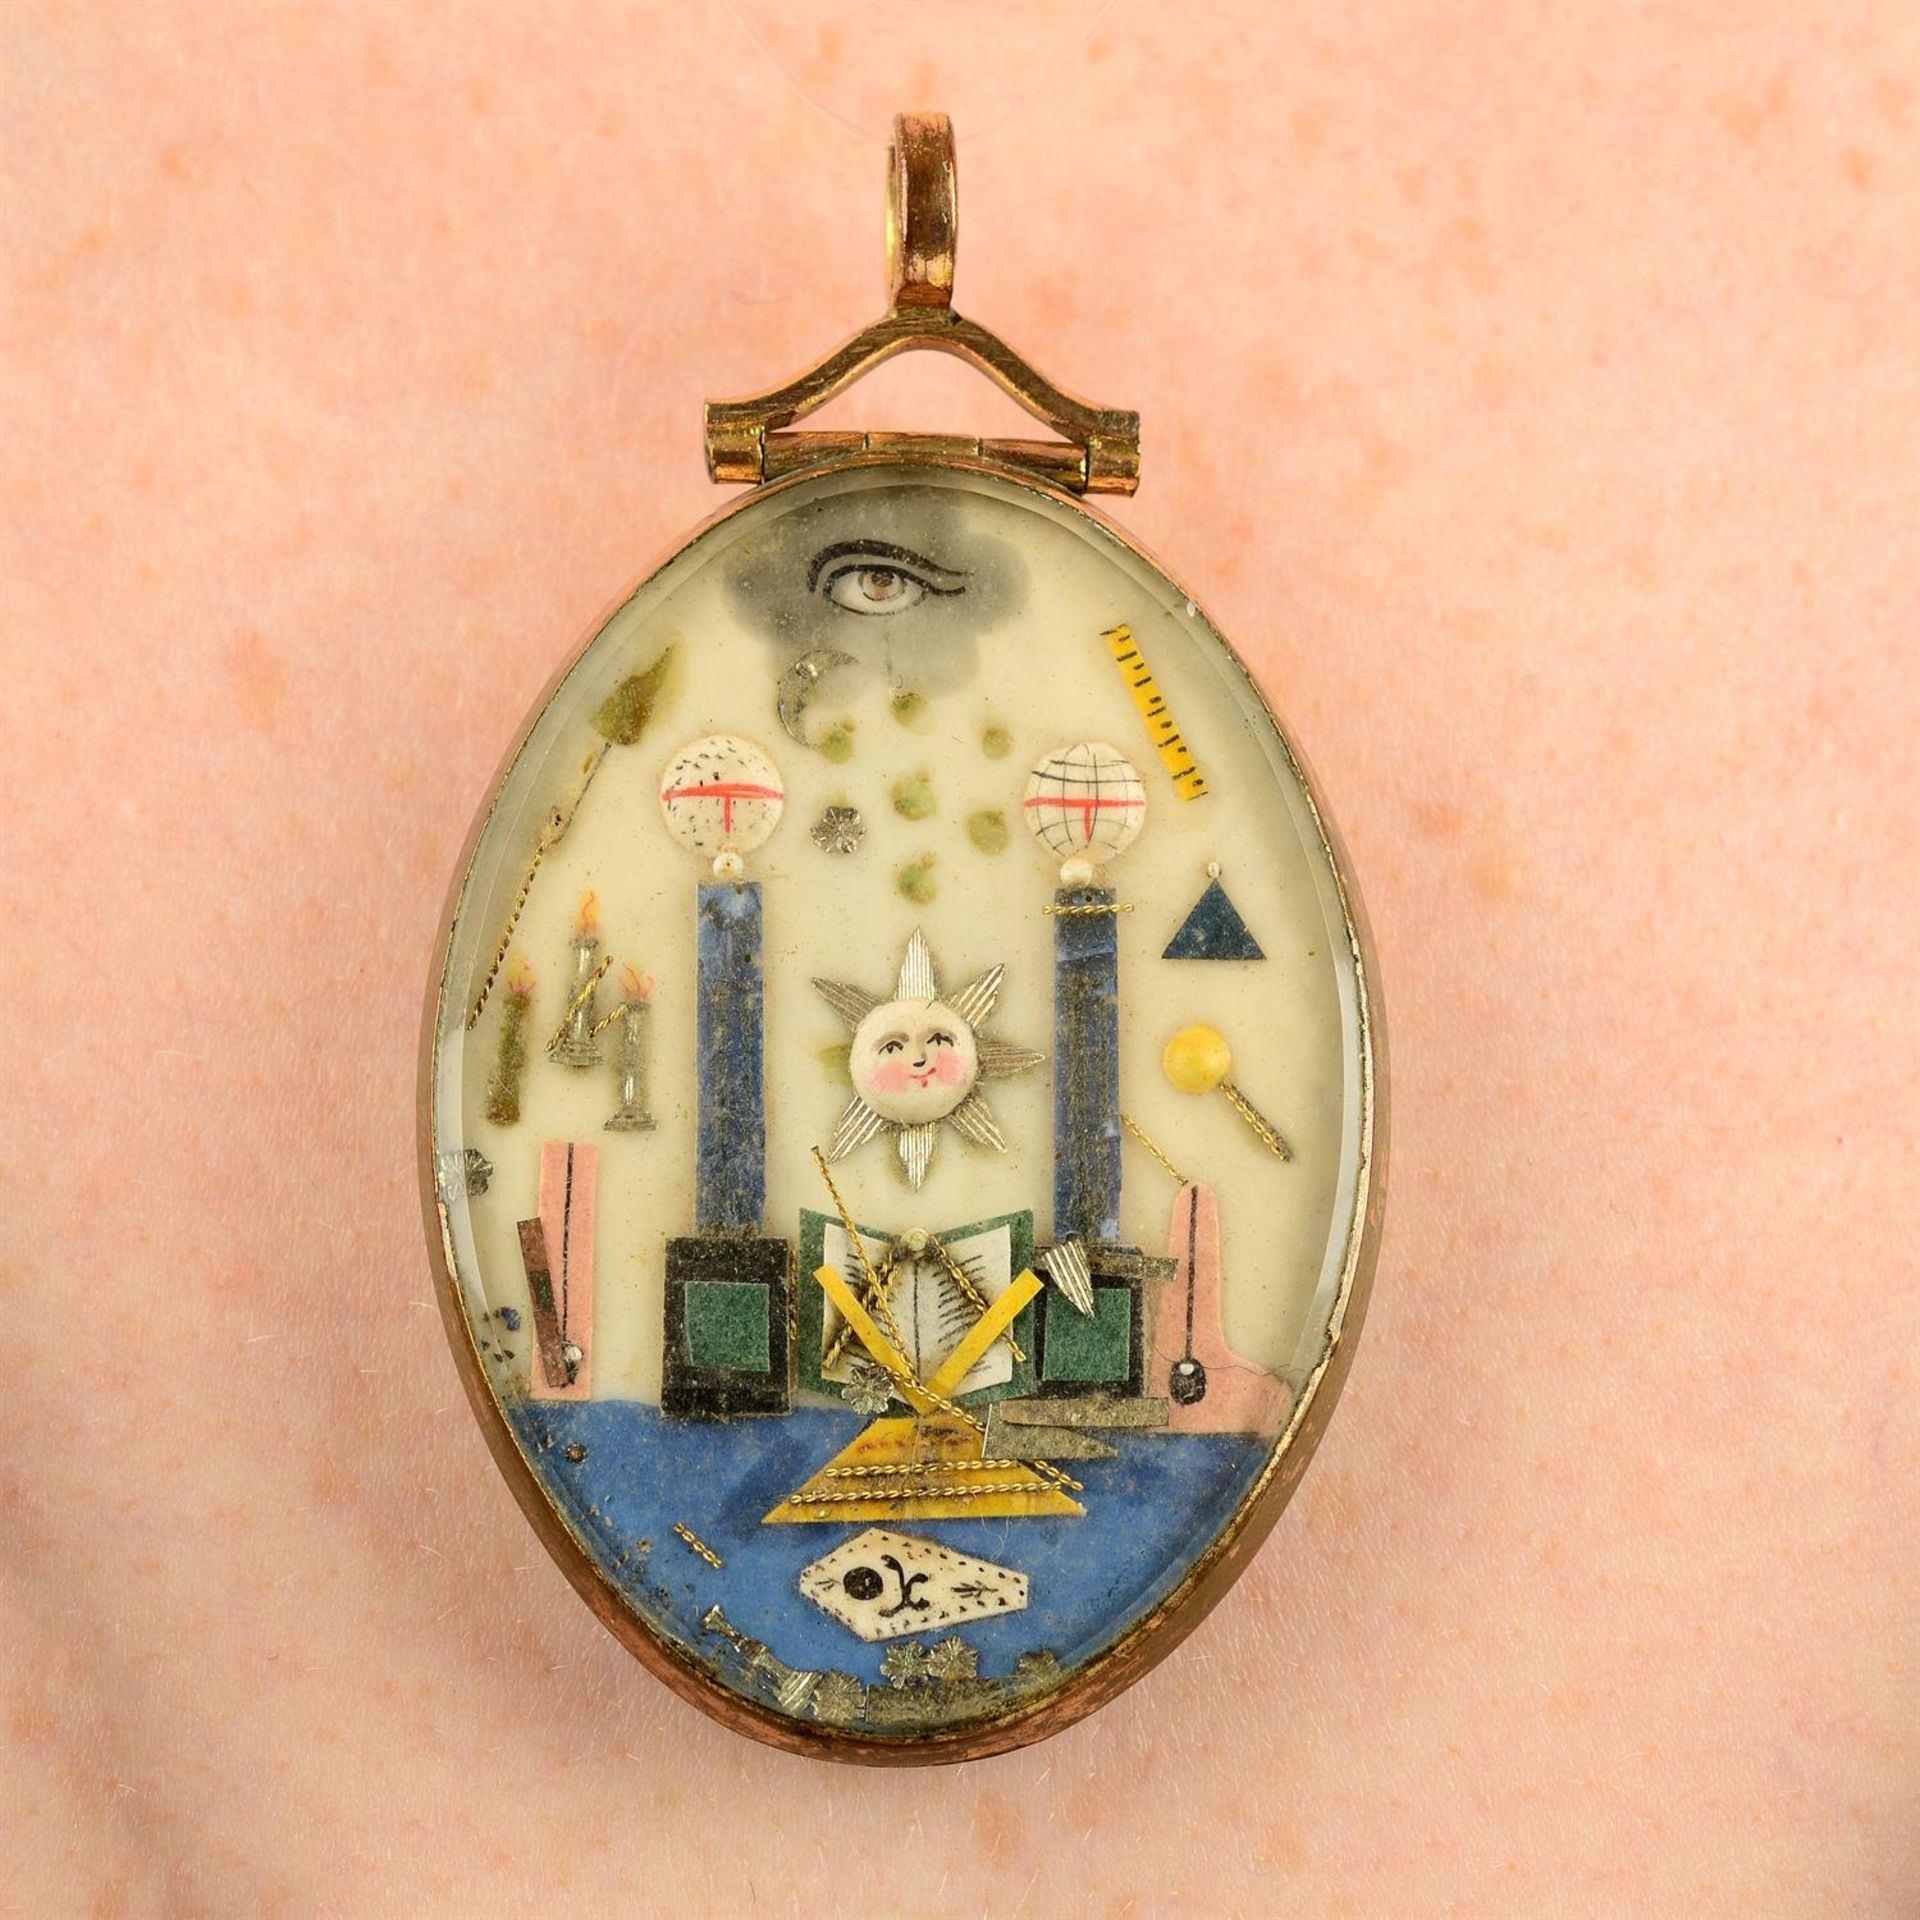 An early 19th century French Napoleonic Prisoner of War Masonic locket pendant, circa 1805.